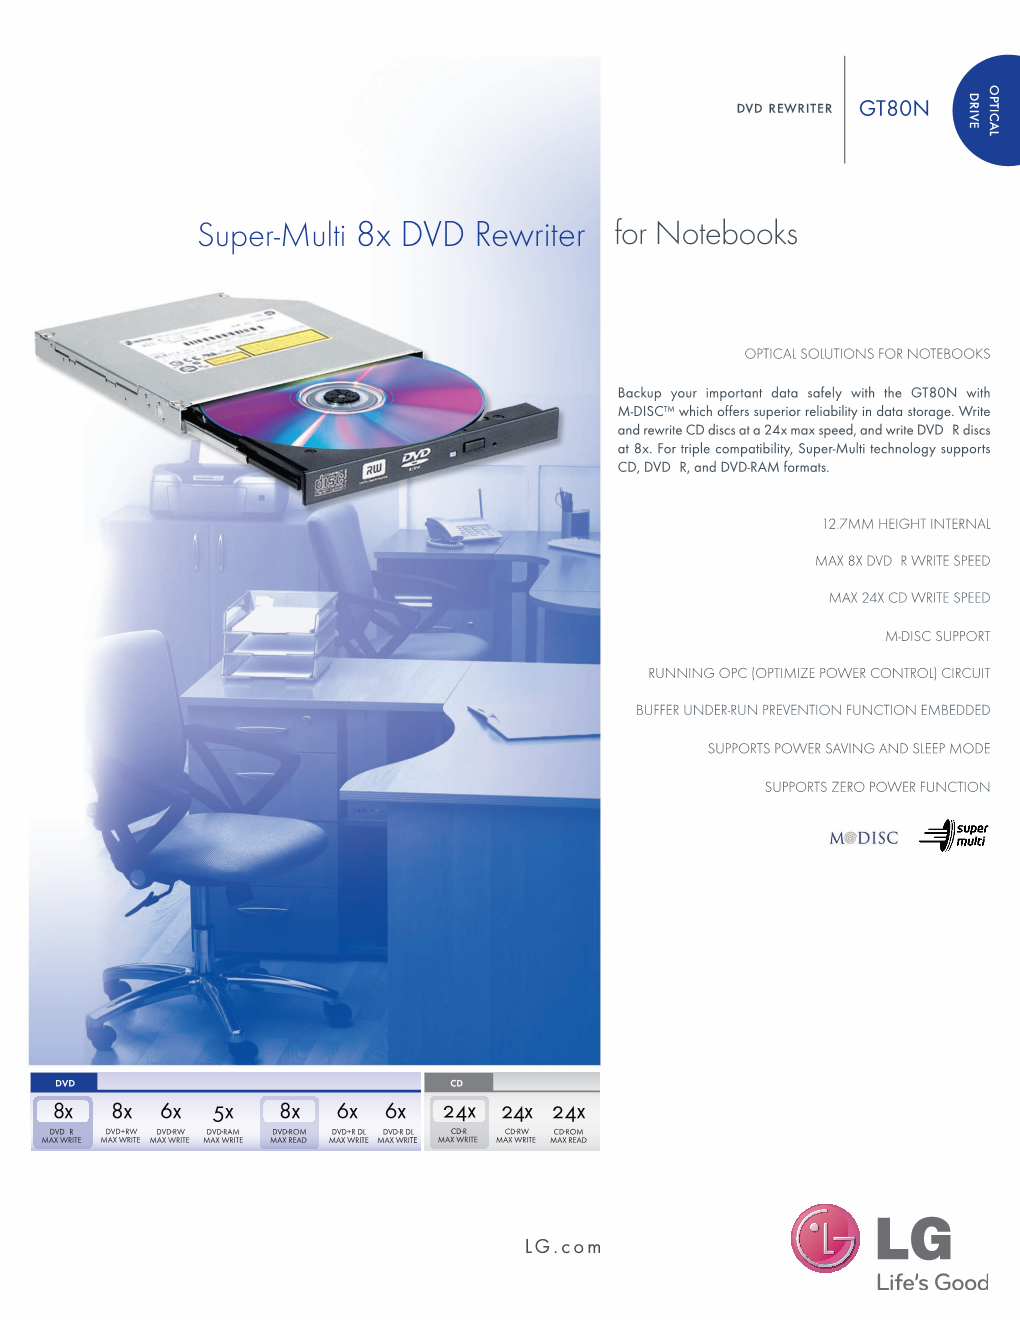 Super-Multi 8X DVD Rewriter for Notebooks